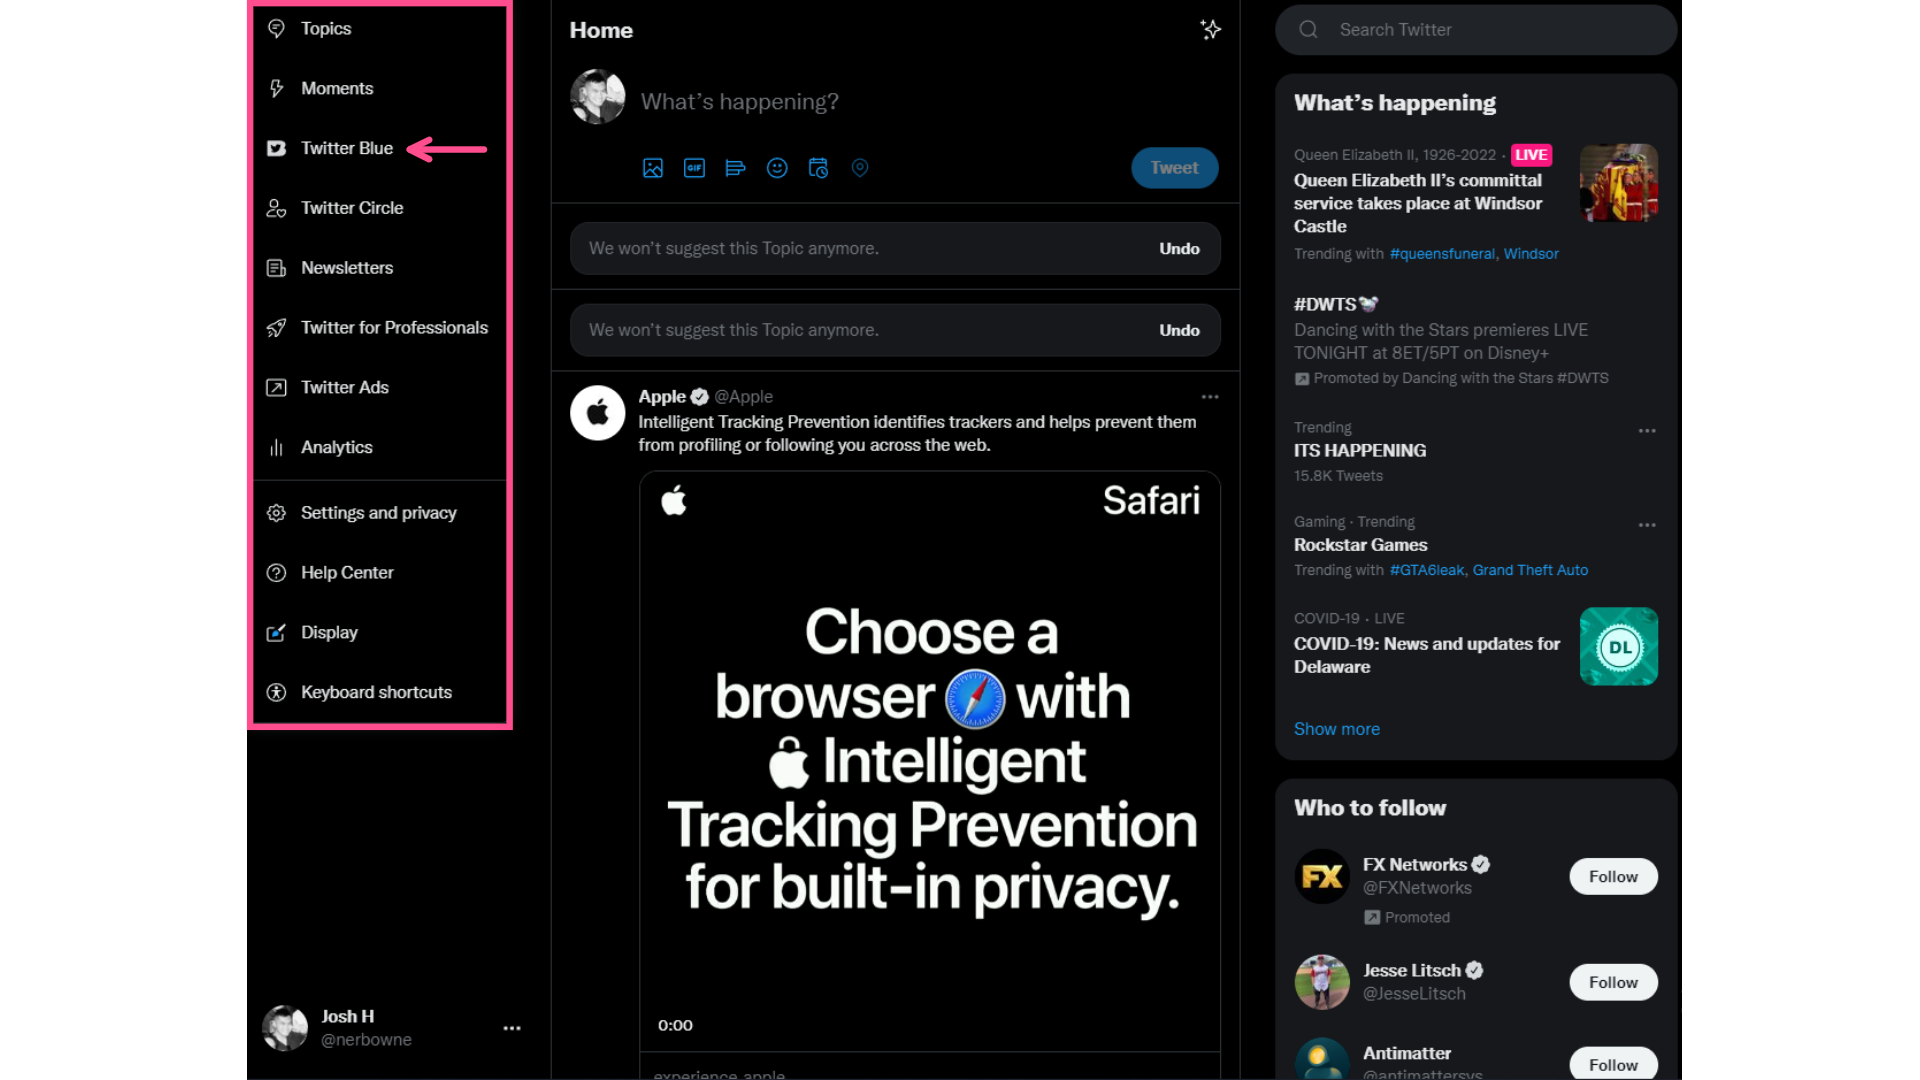 A screenshot showing the Twitter side panel on desktop